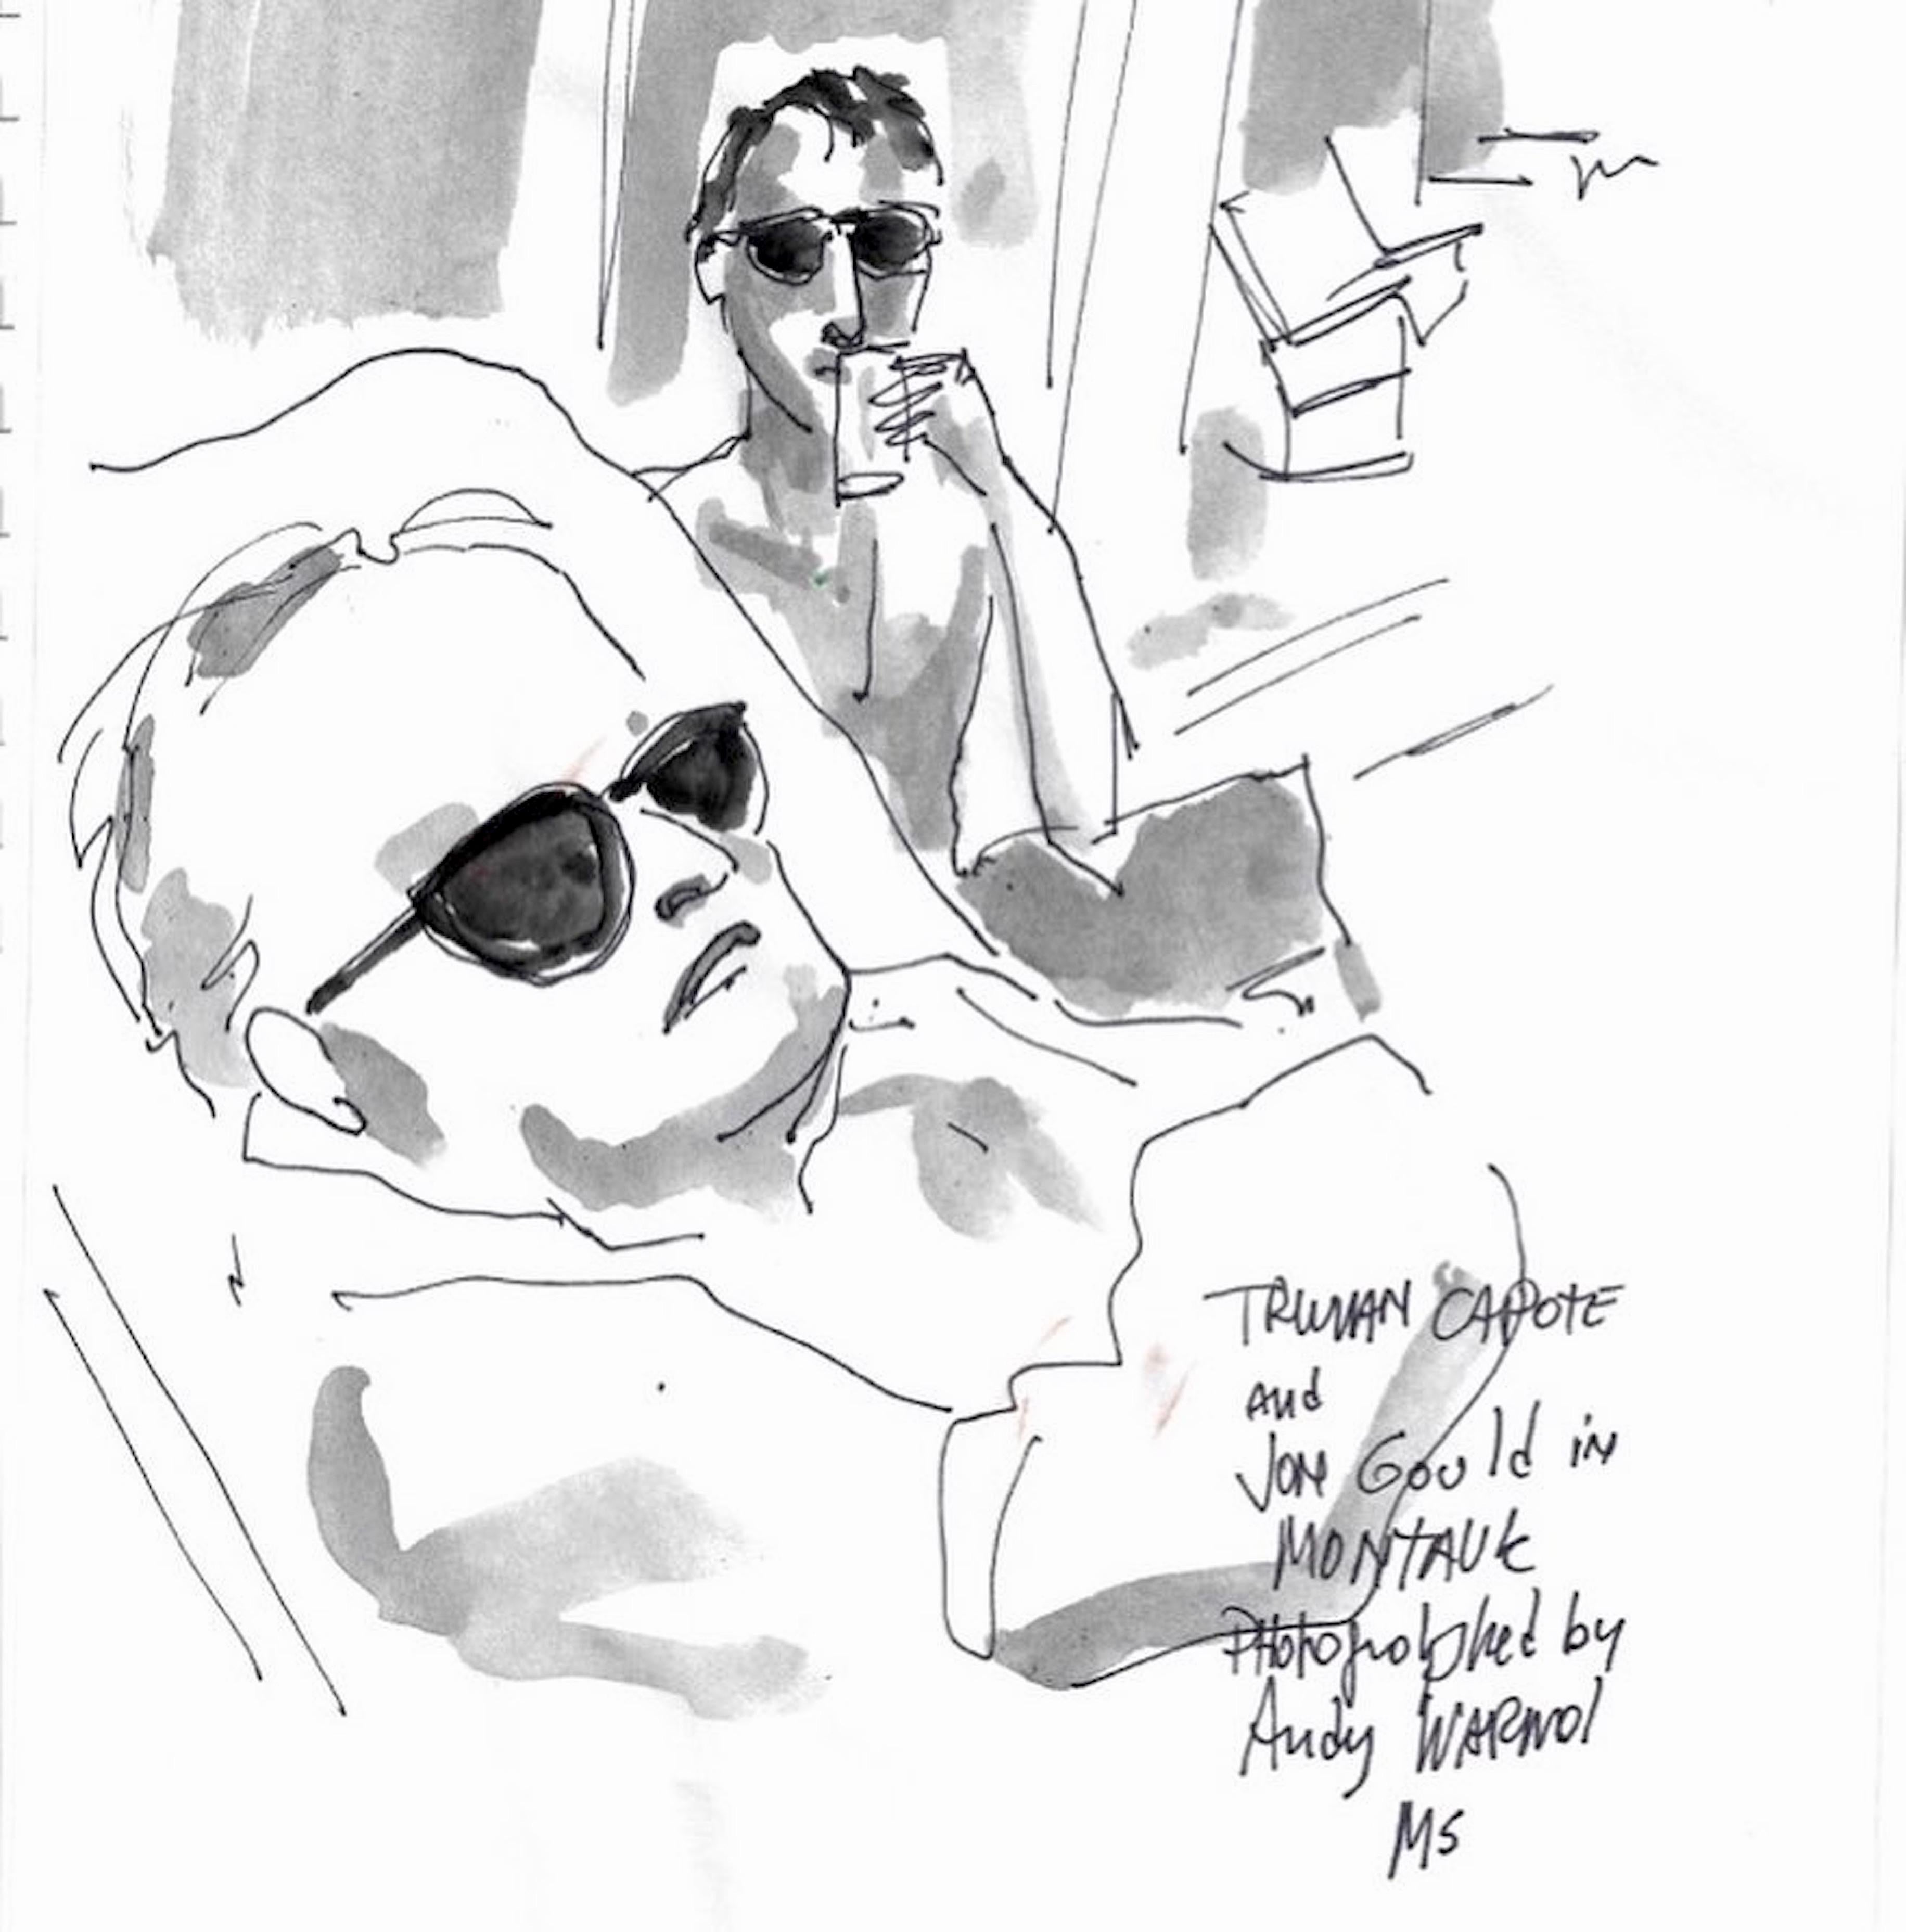 Truman Capote und Jon Gould in Montauk, Serie „The Love of Andy“ – Art von Manuel Santelices